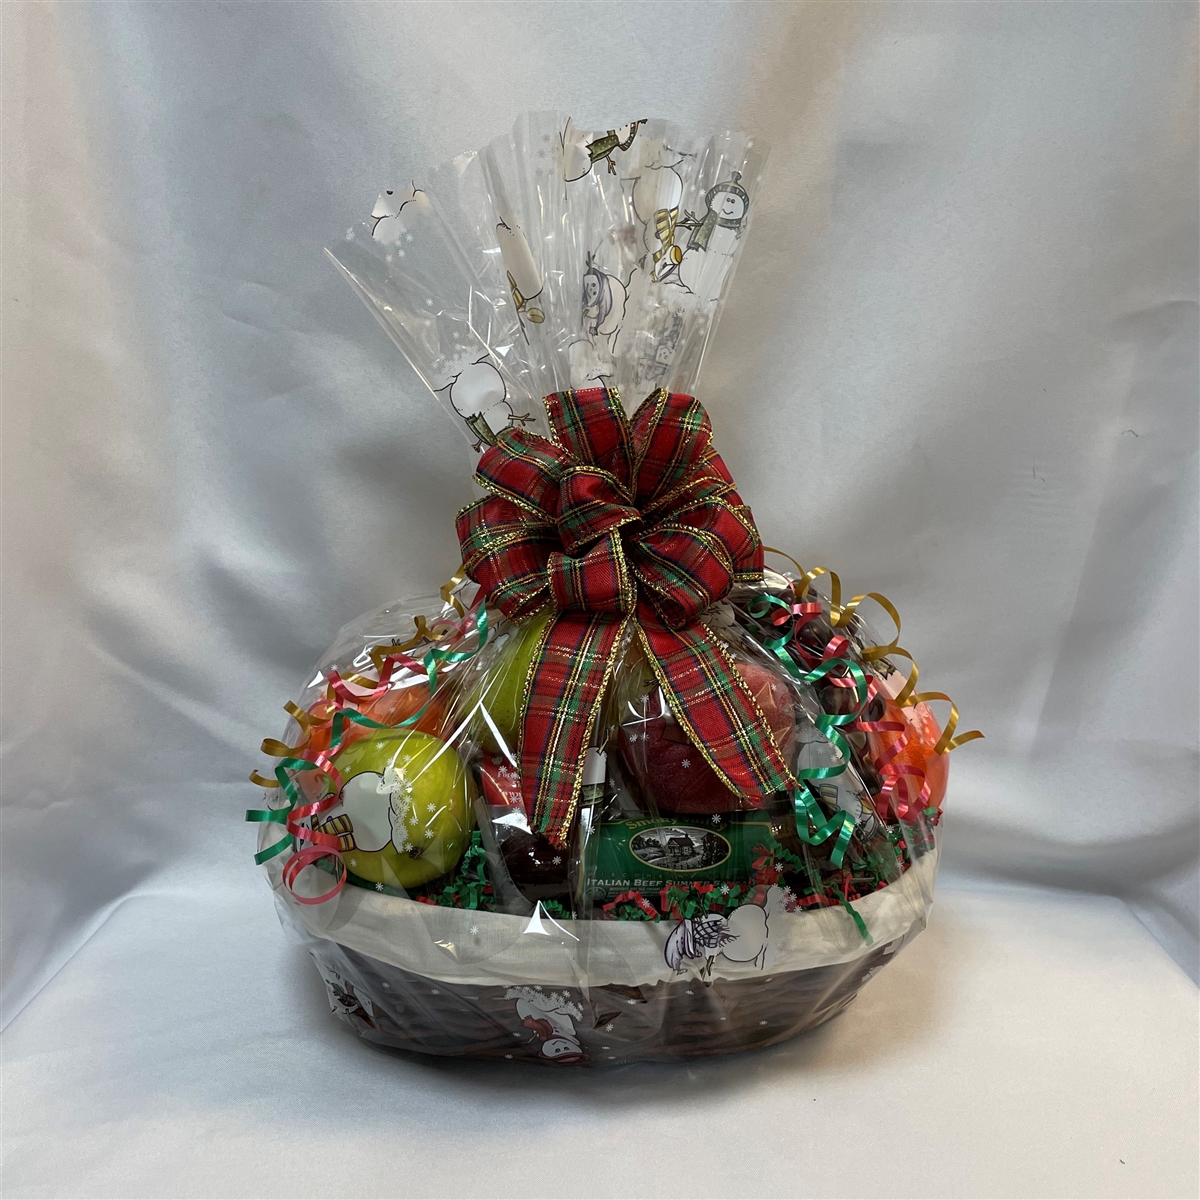 Birthday Gift Baskets For Him | Teenage girl gifts christmas, Gift baskets  for him, Diy gifts for him